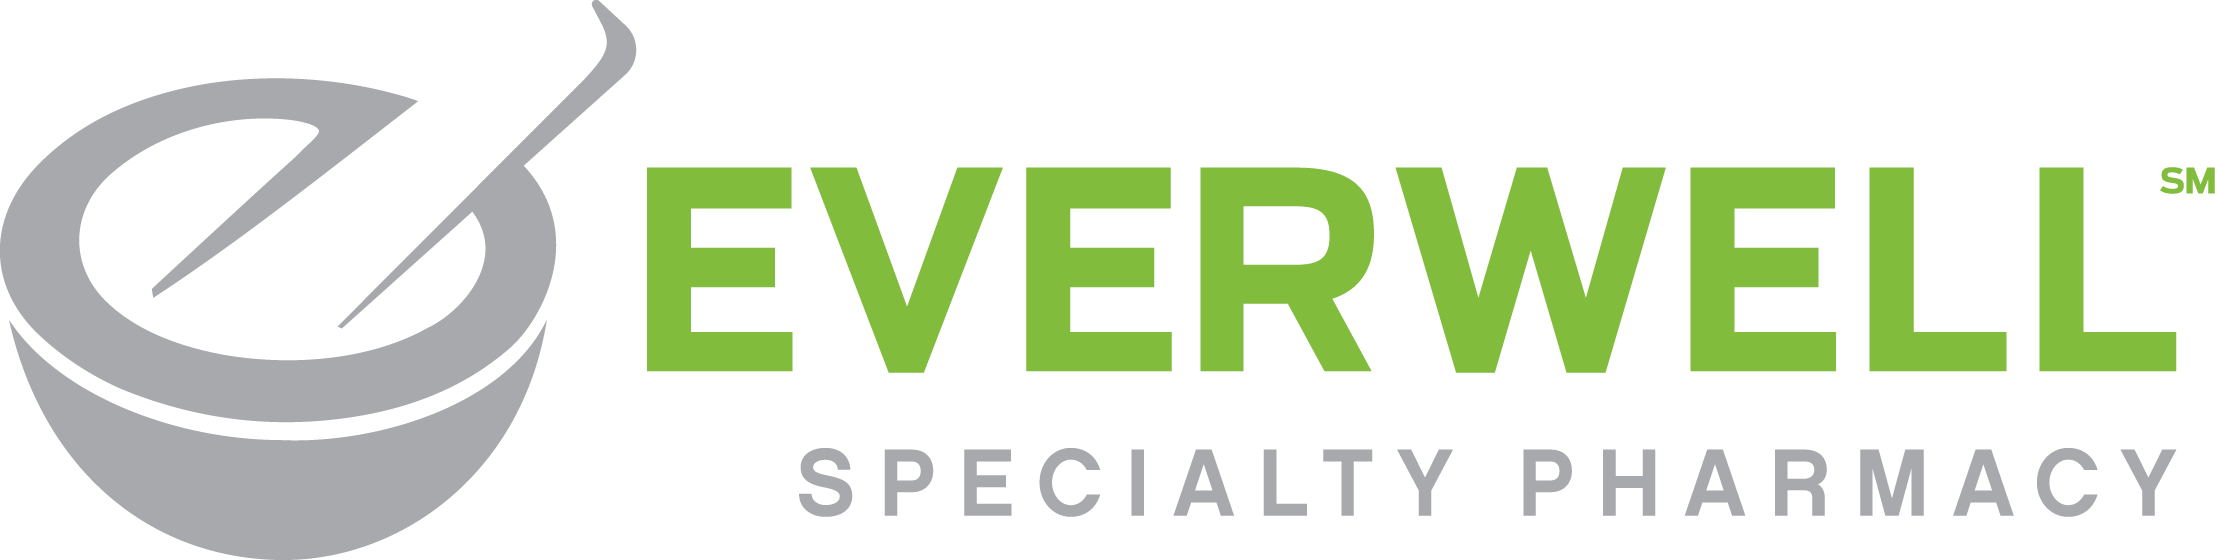 Everwell Specialty Pharmacy logo